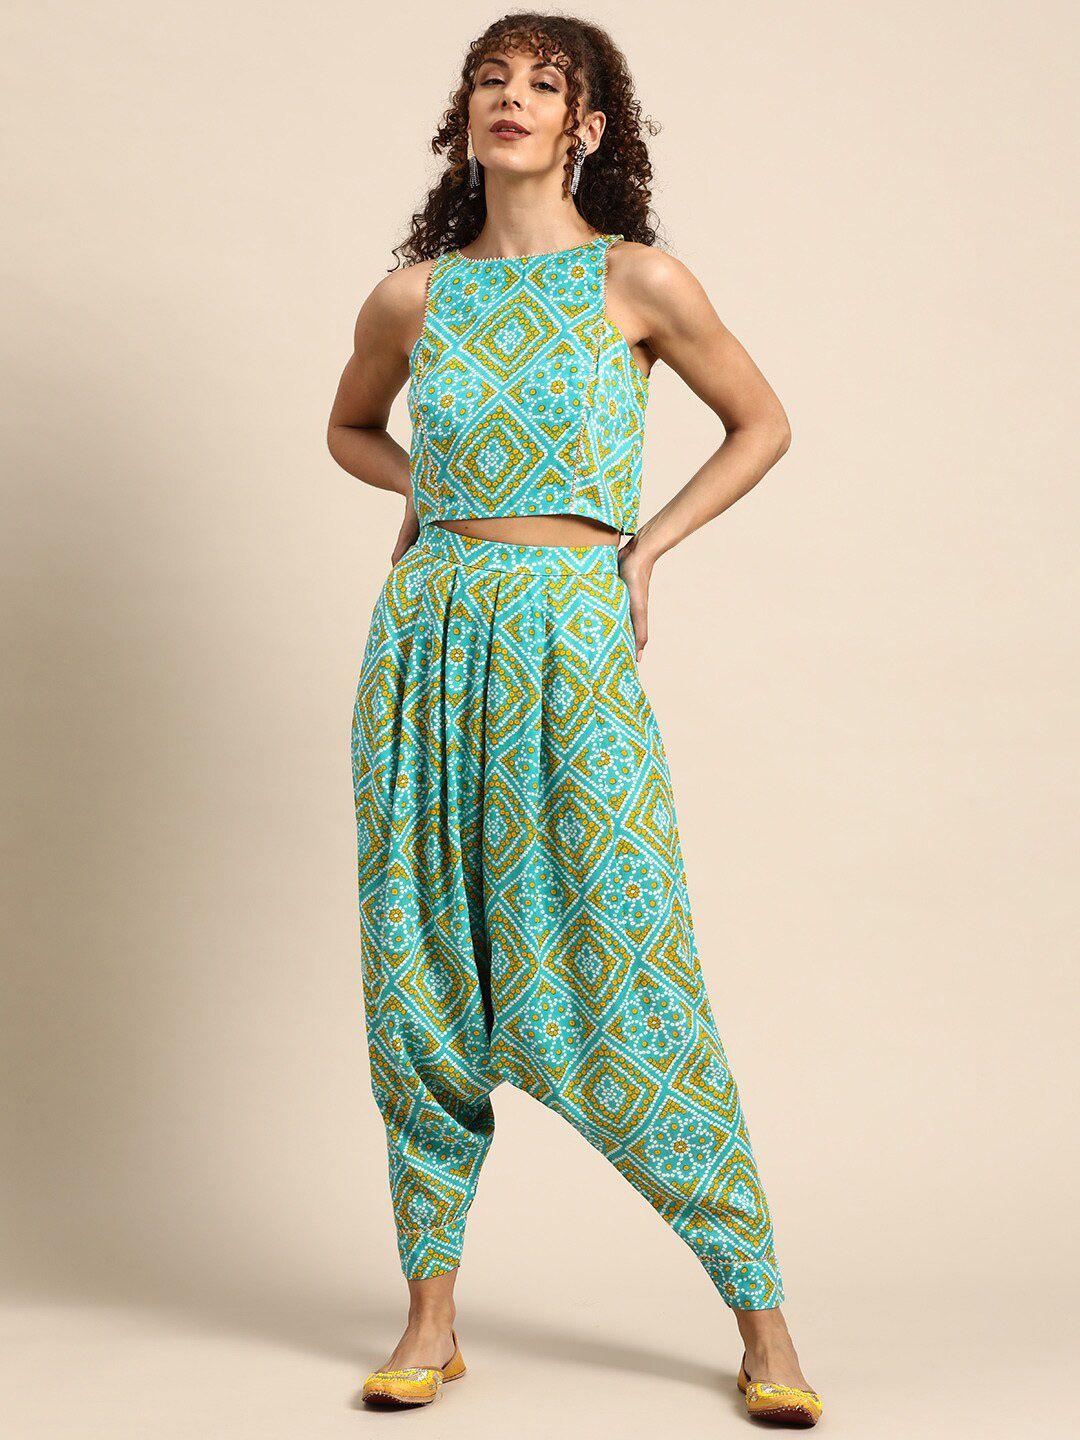 mabish by sonal jain printed top with dhoti pants co-ords